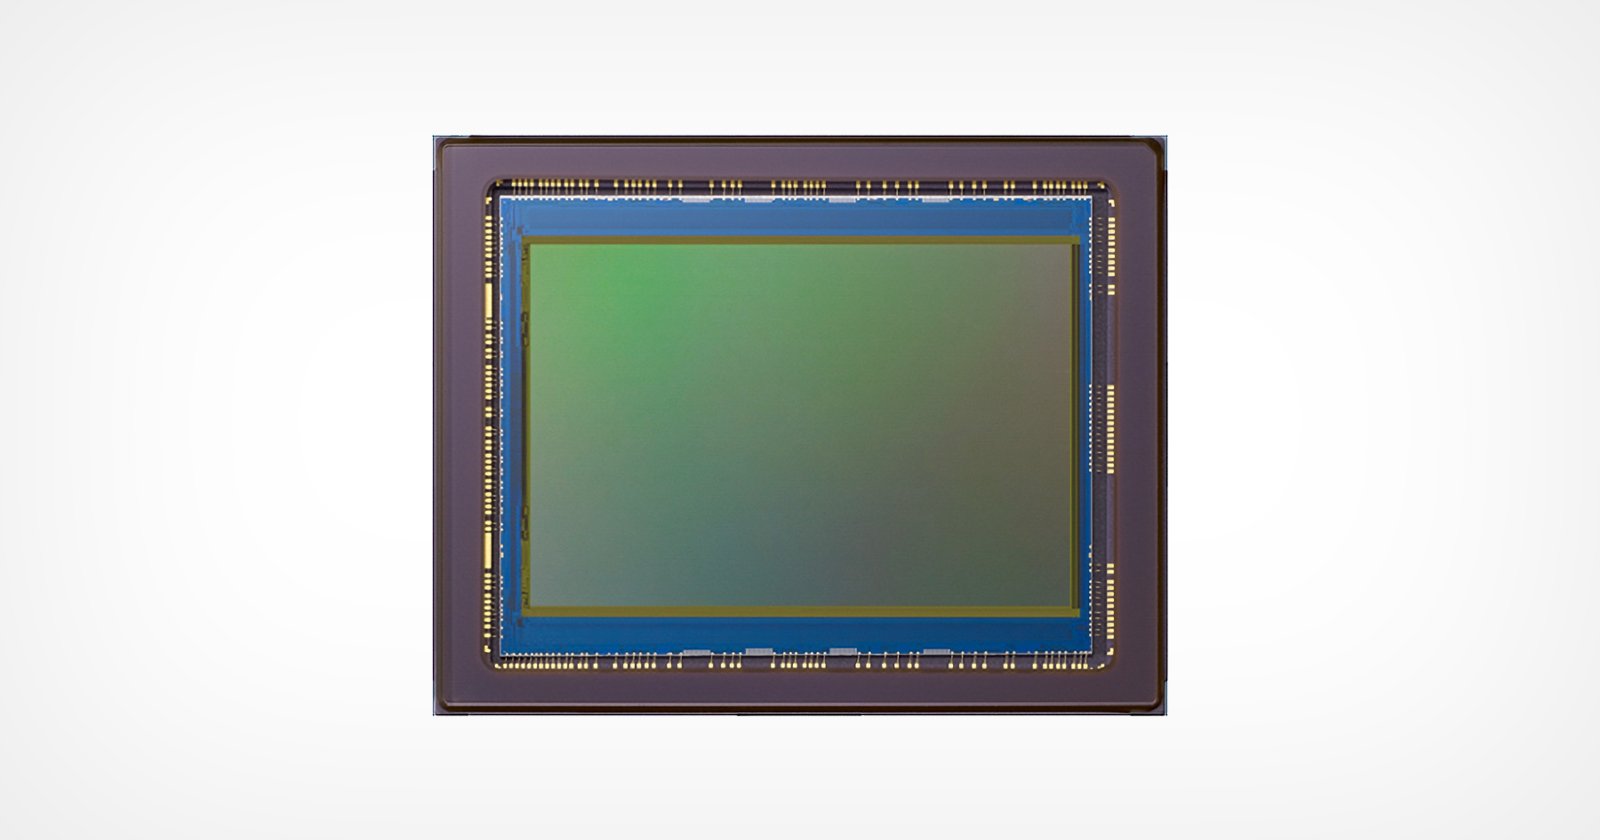 New 2-layer transistor pixel sensor tech